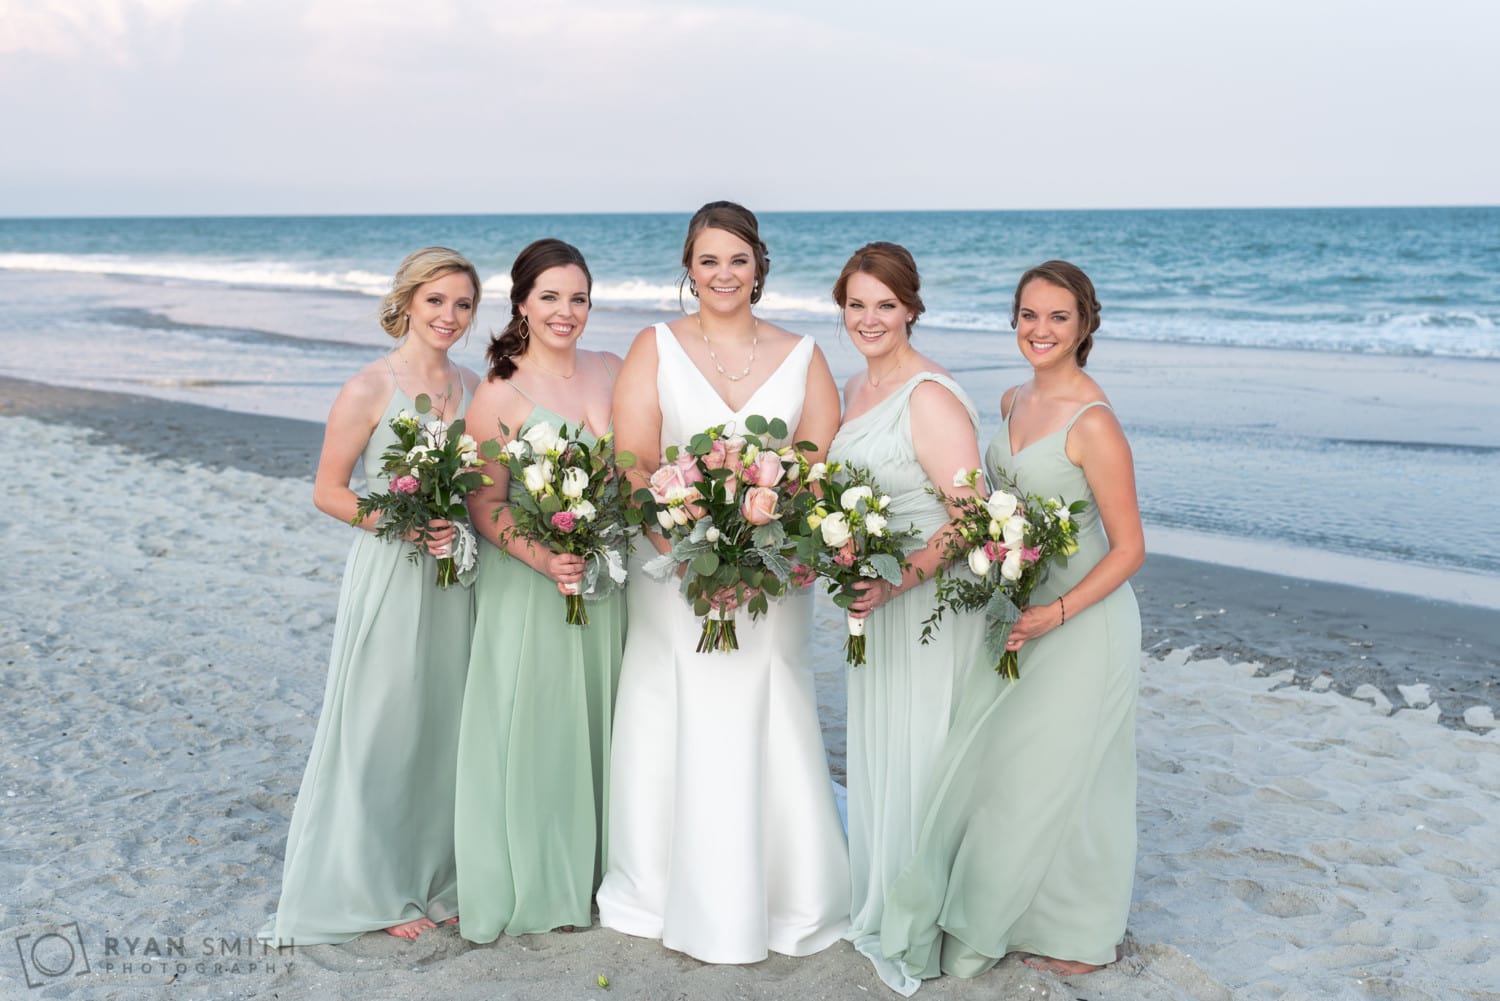 Fun bridal party pictures by the ocean - Grande Dunes Ocean Club - Myrtle Beach